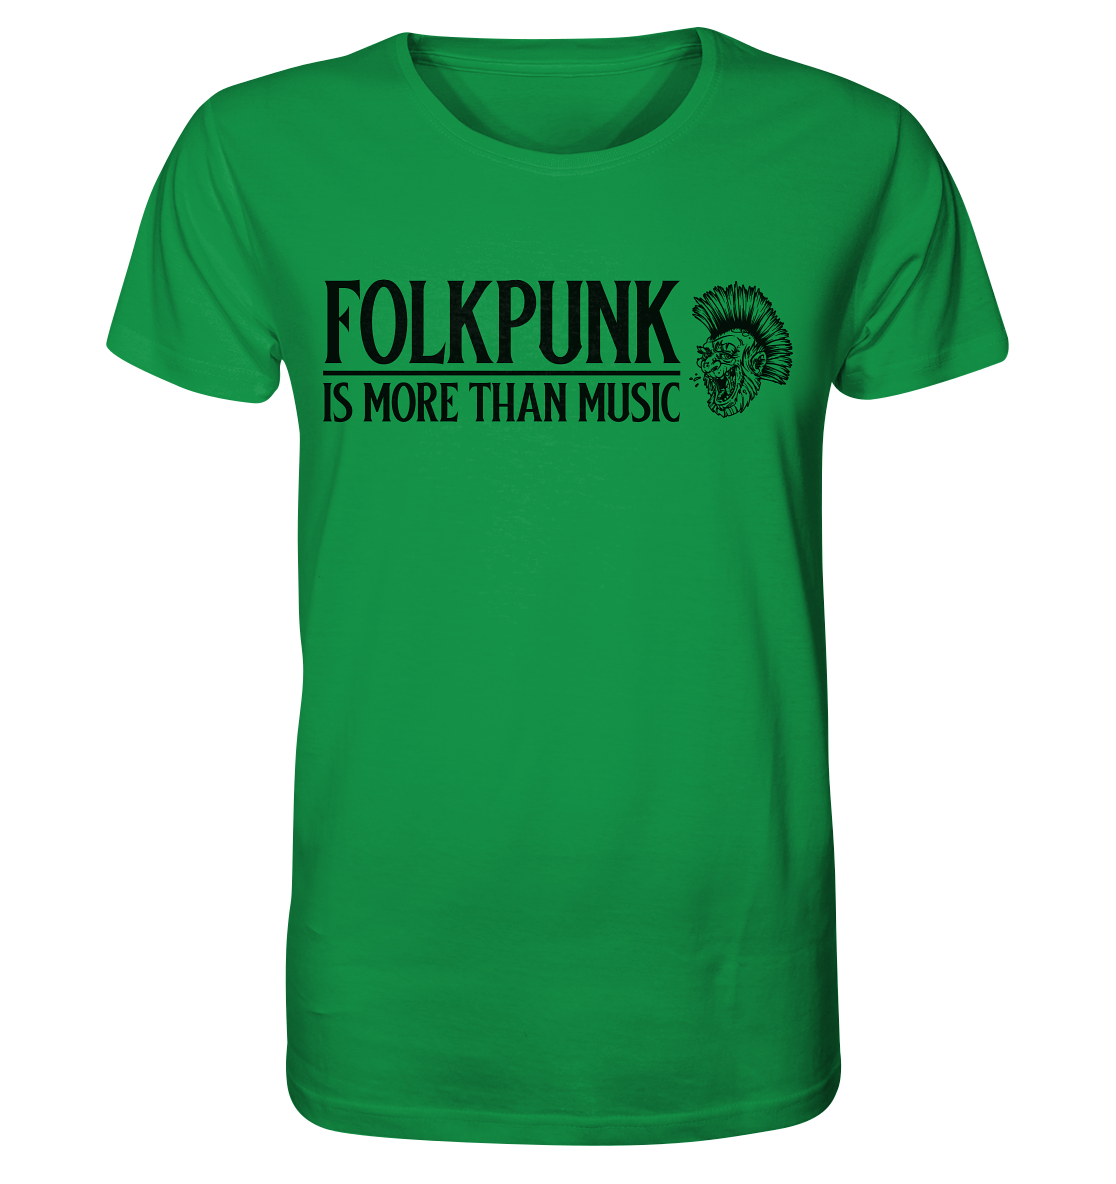 Folkpunk "Is More Than Music" - Organic Shirt